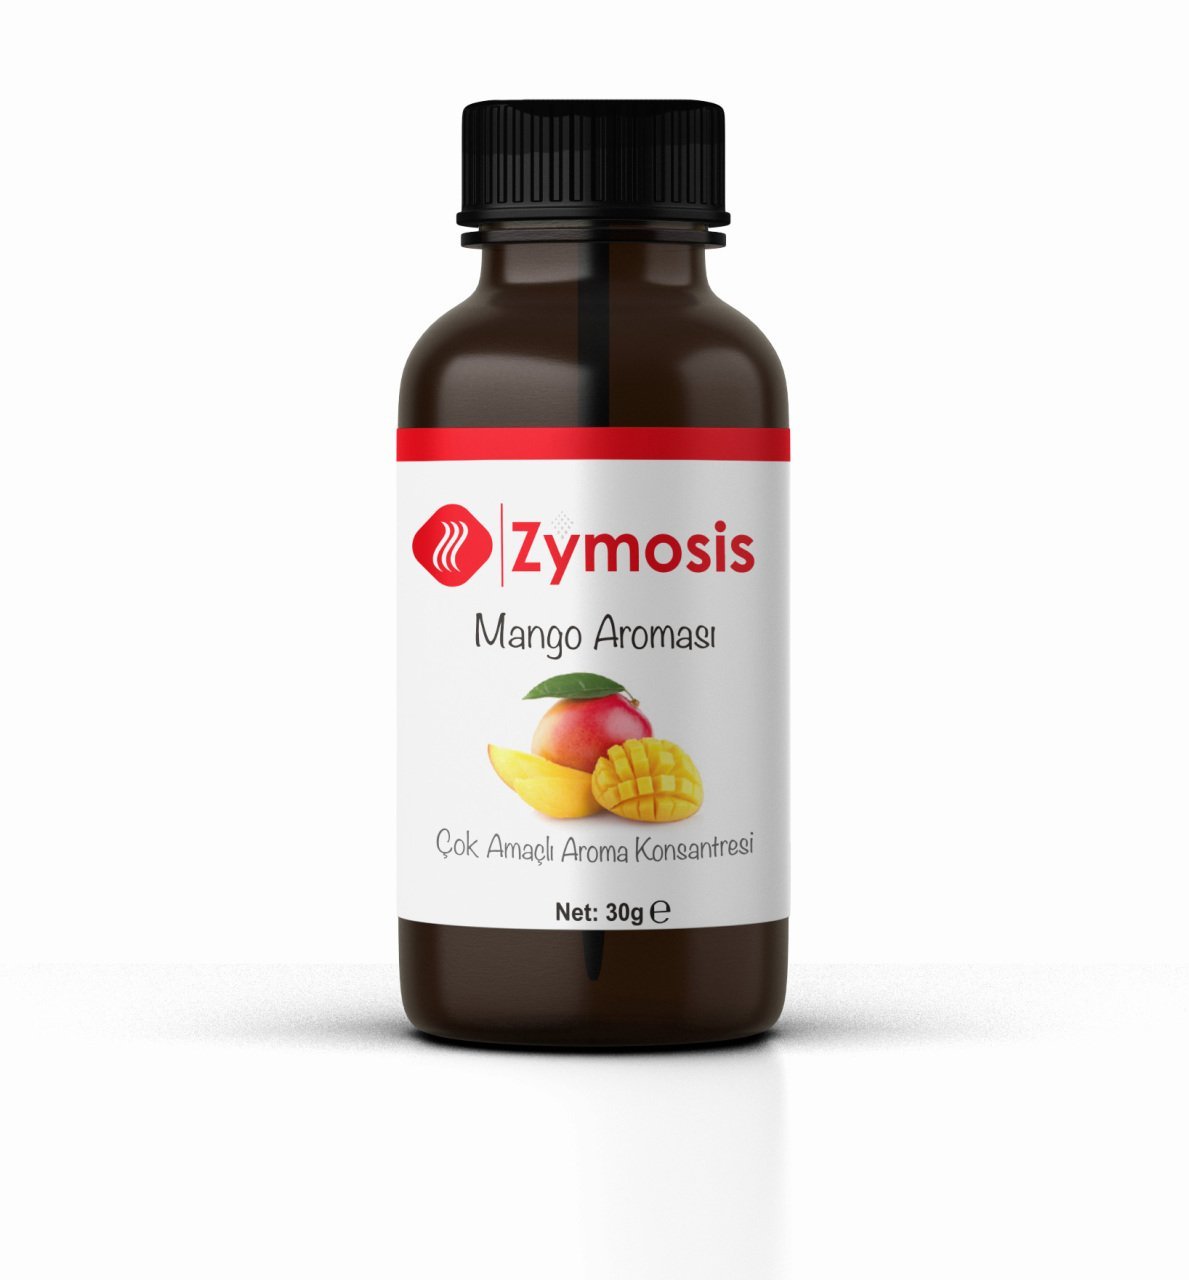 Zymosis Mango Aroması